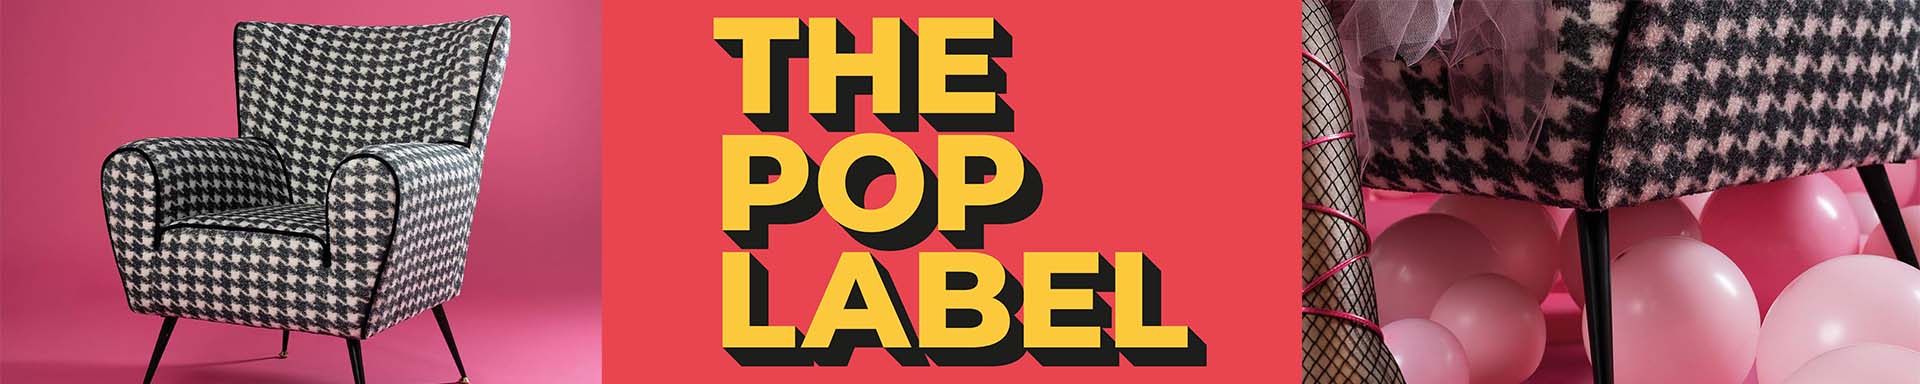 The Pop Label